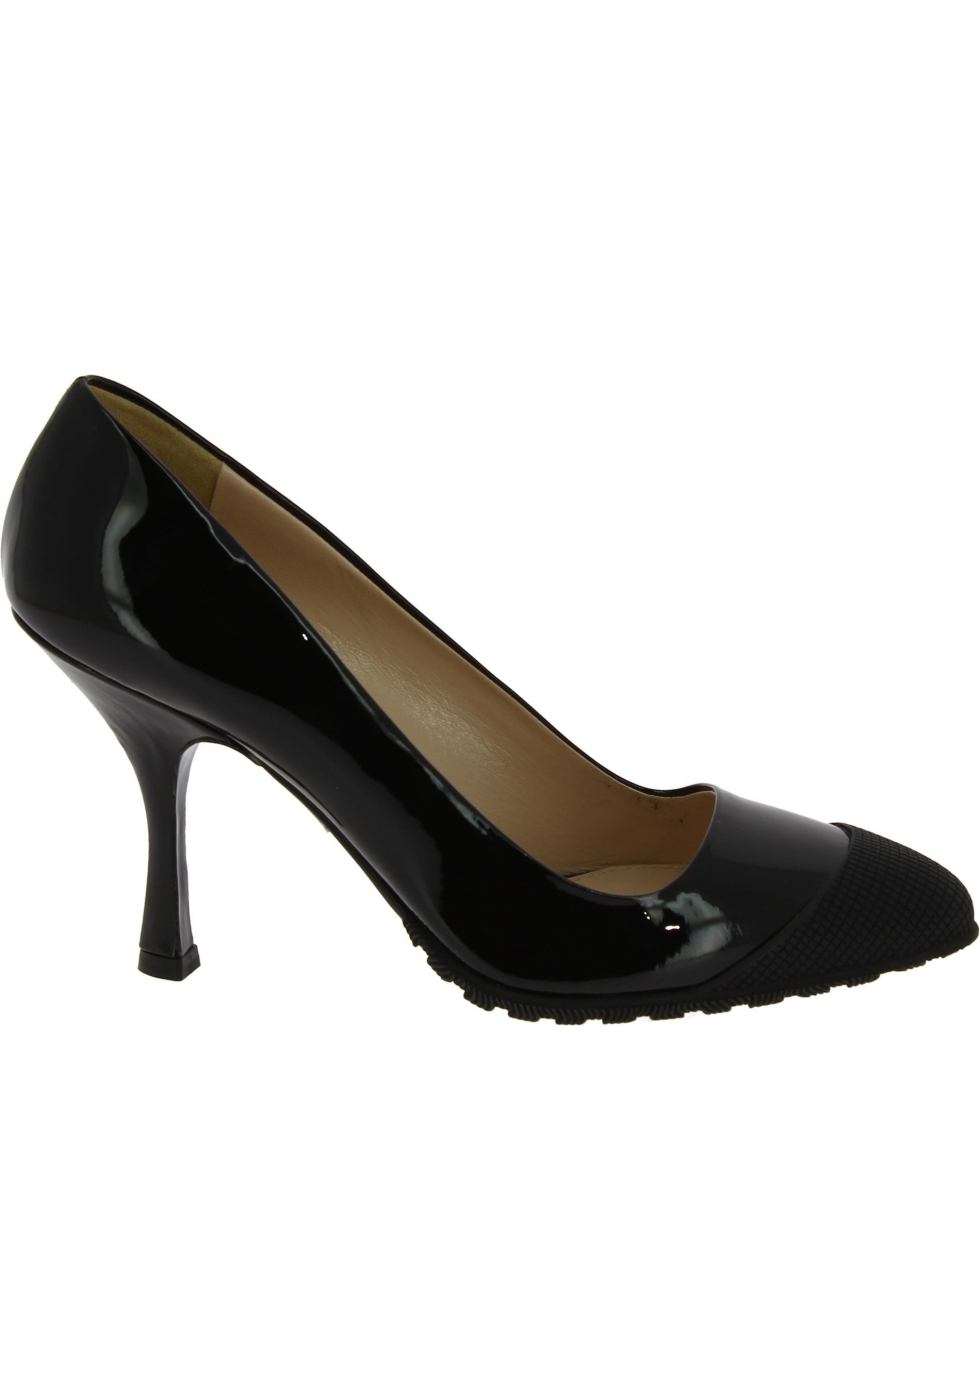 Miu Miu Women's fashion pointed toe spool heel pumps in black patent